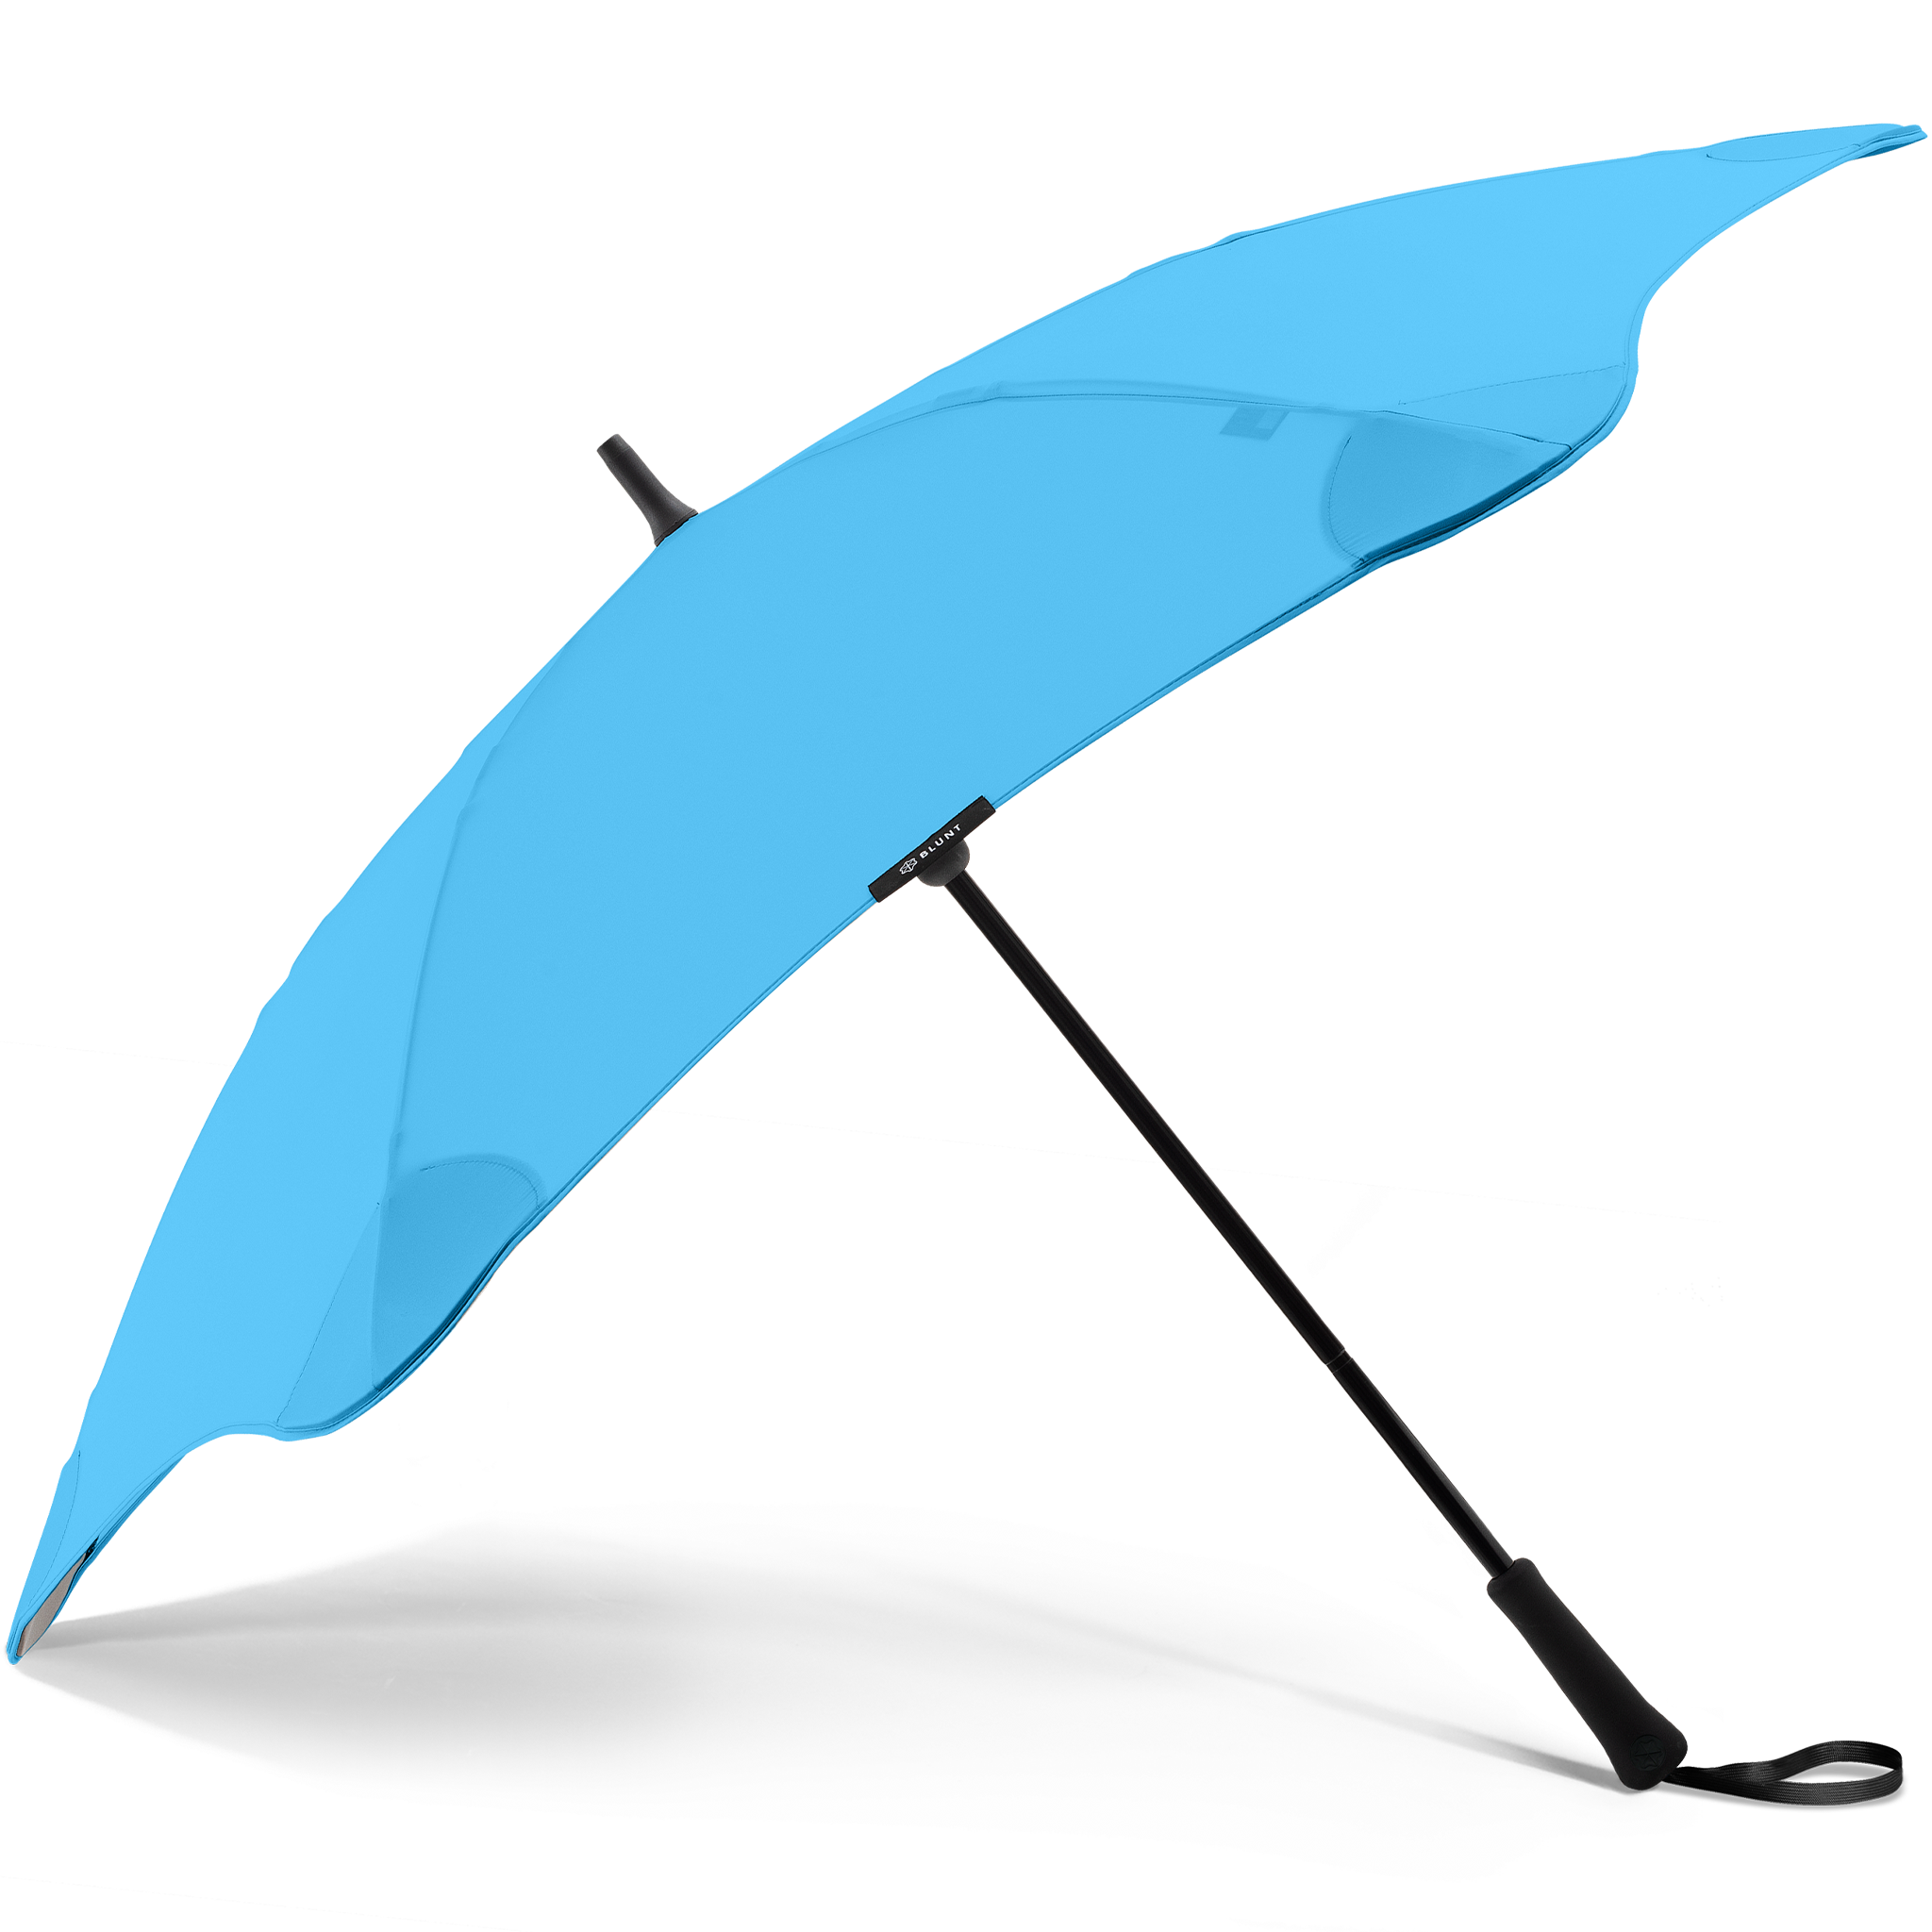 2020 Classic Blue Blunt Umbrella Side View